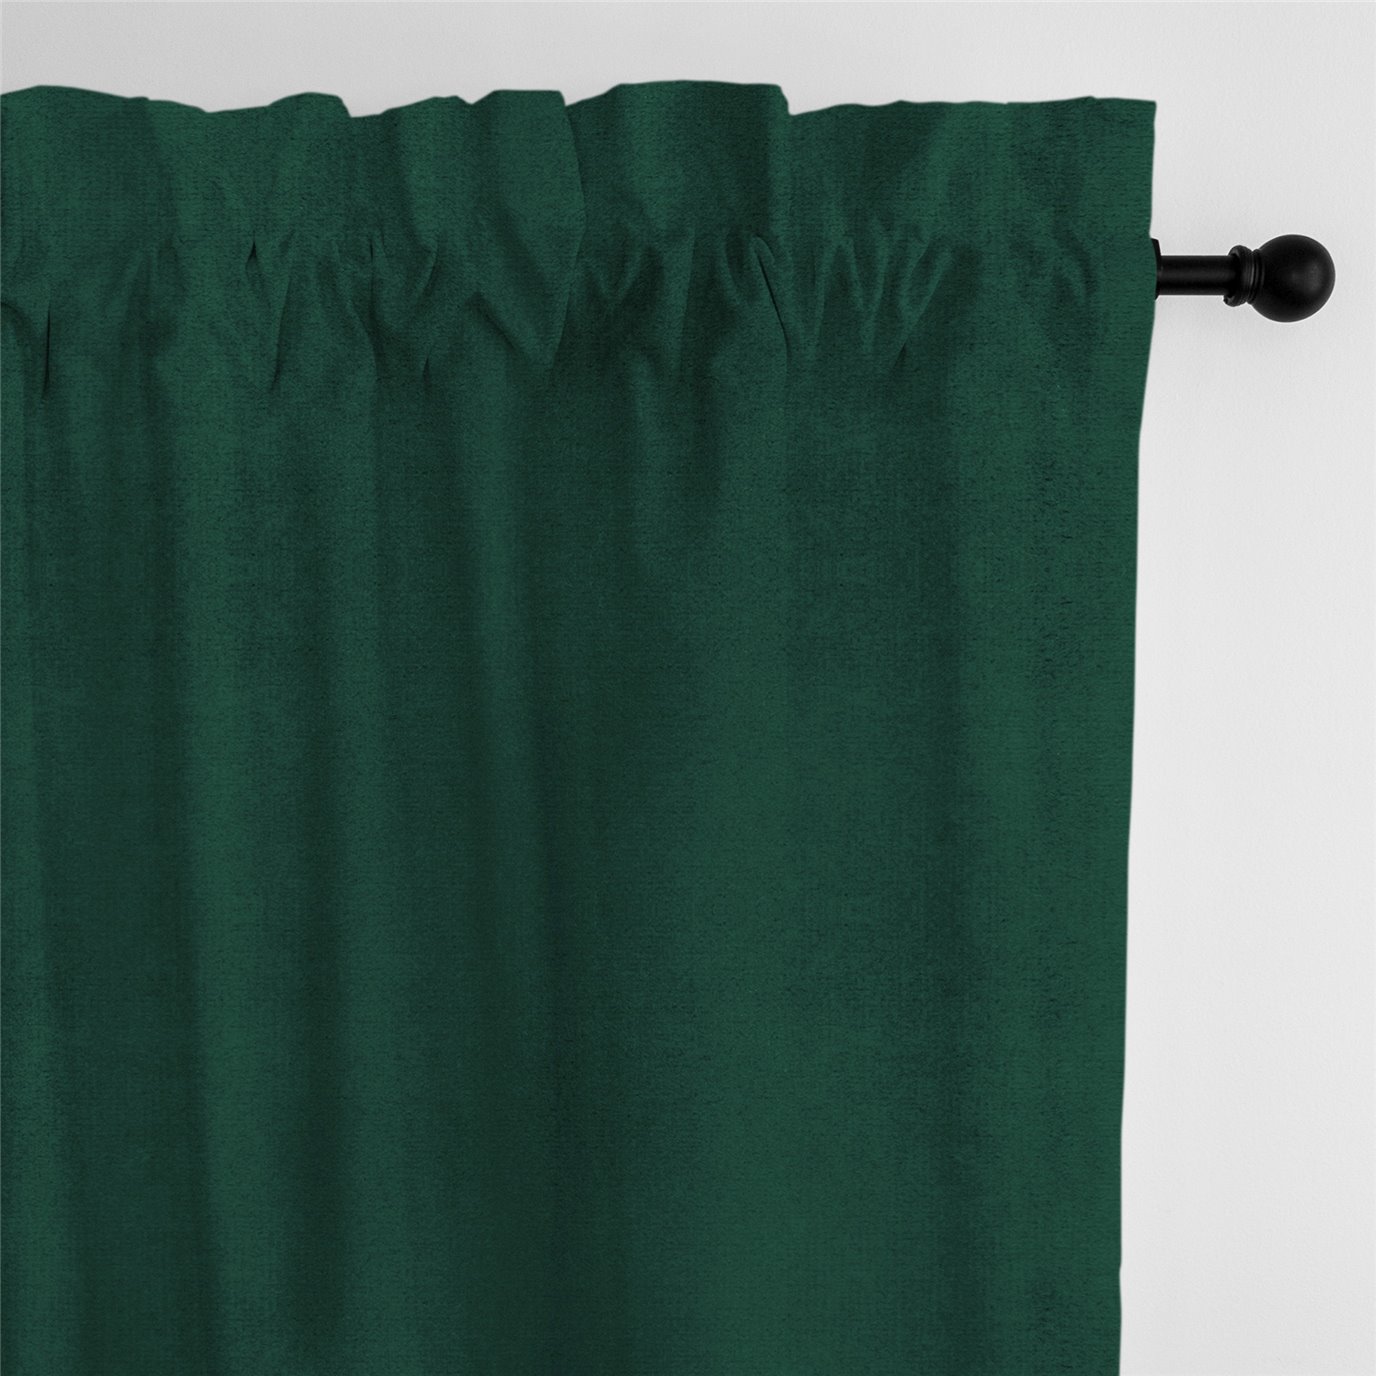 Vanessa Emerald Pole Top Drapery Panel - Pair - Size 50"x108"